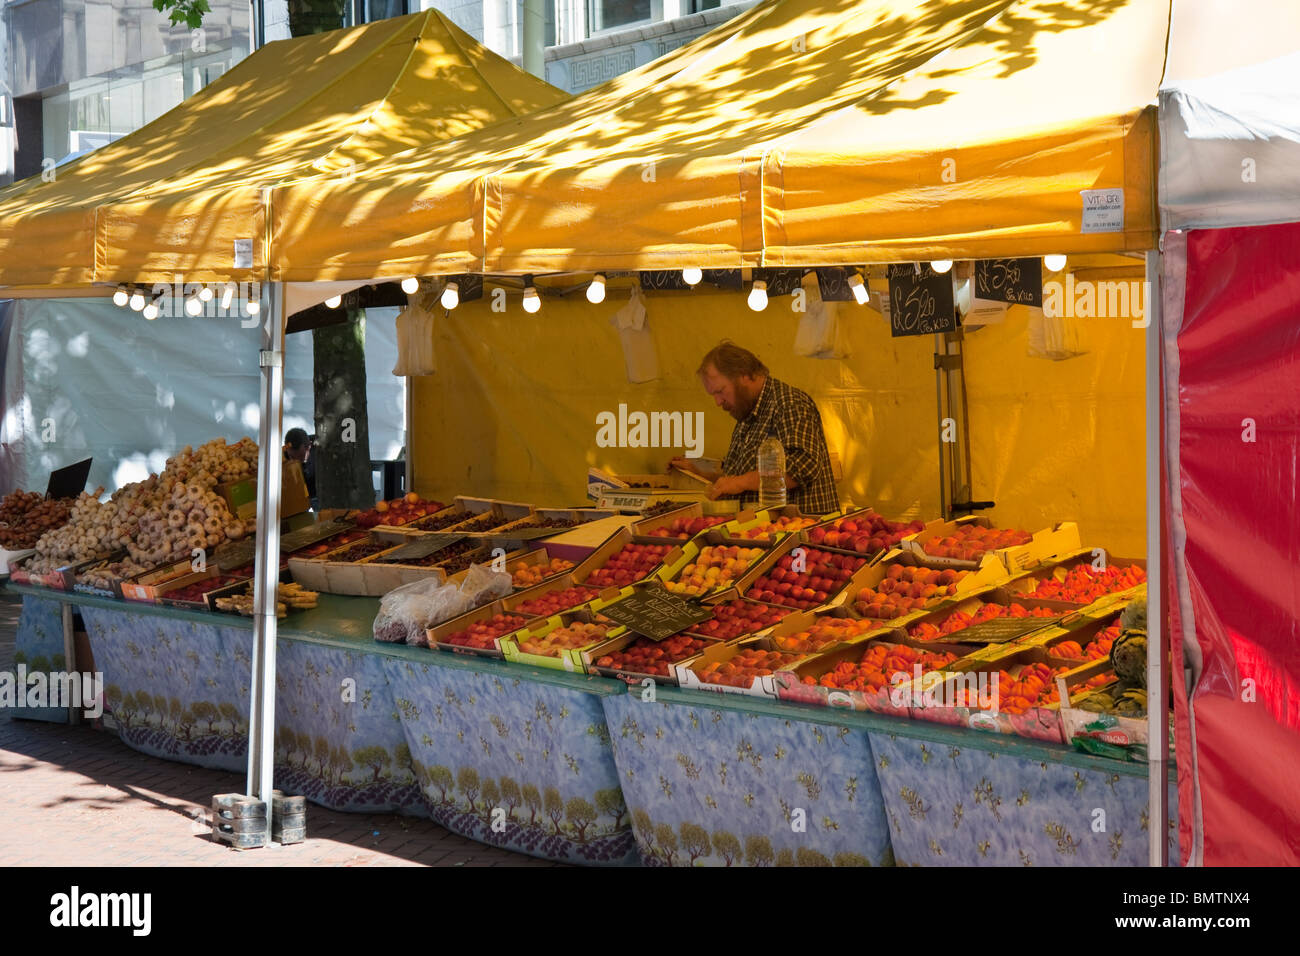 Market stall in Birmingham Uk selling fruit Stock Photo